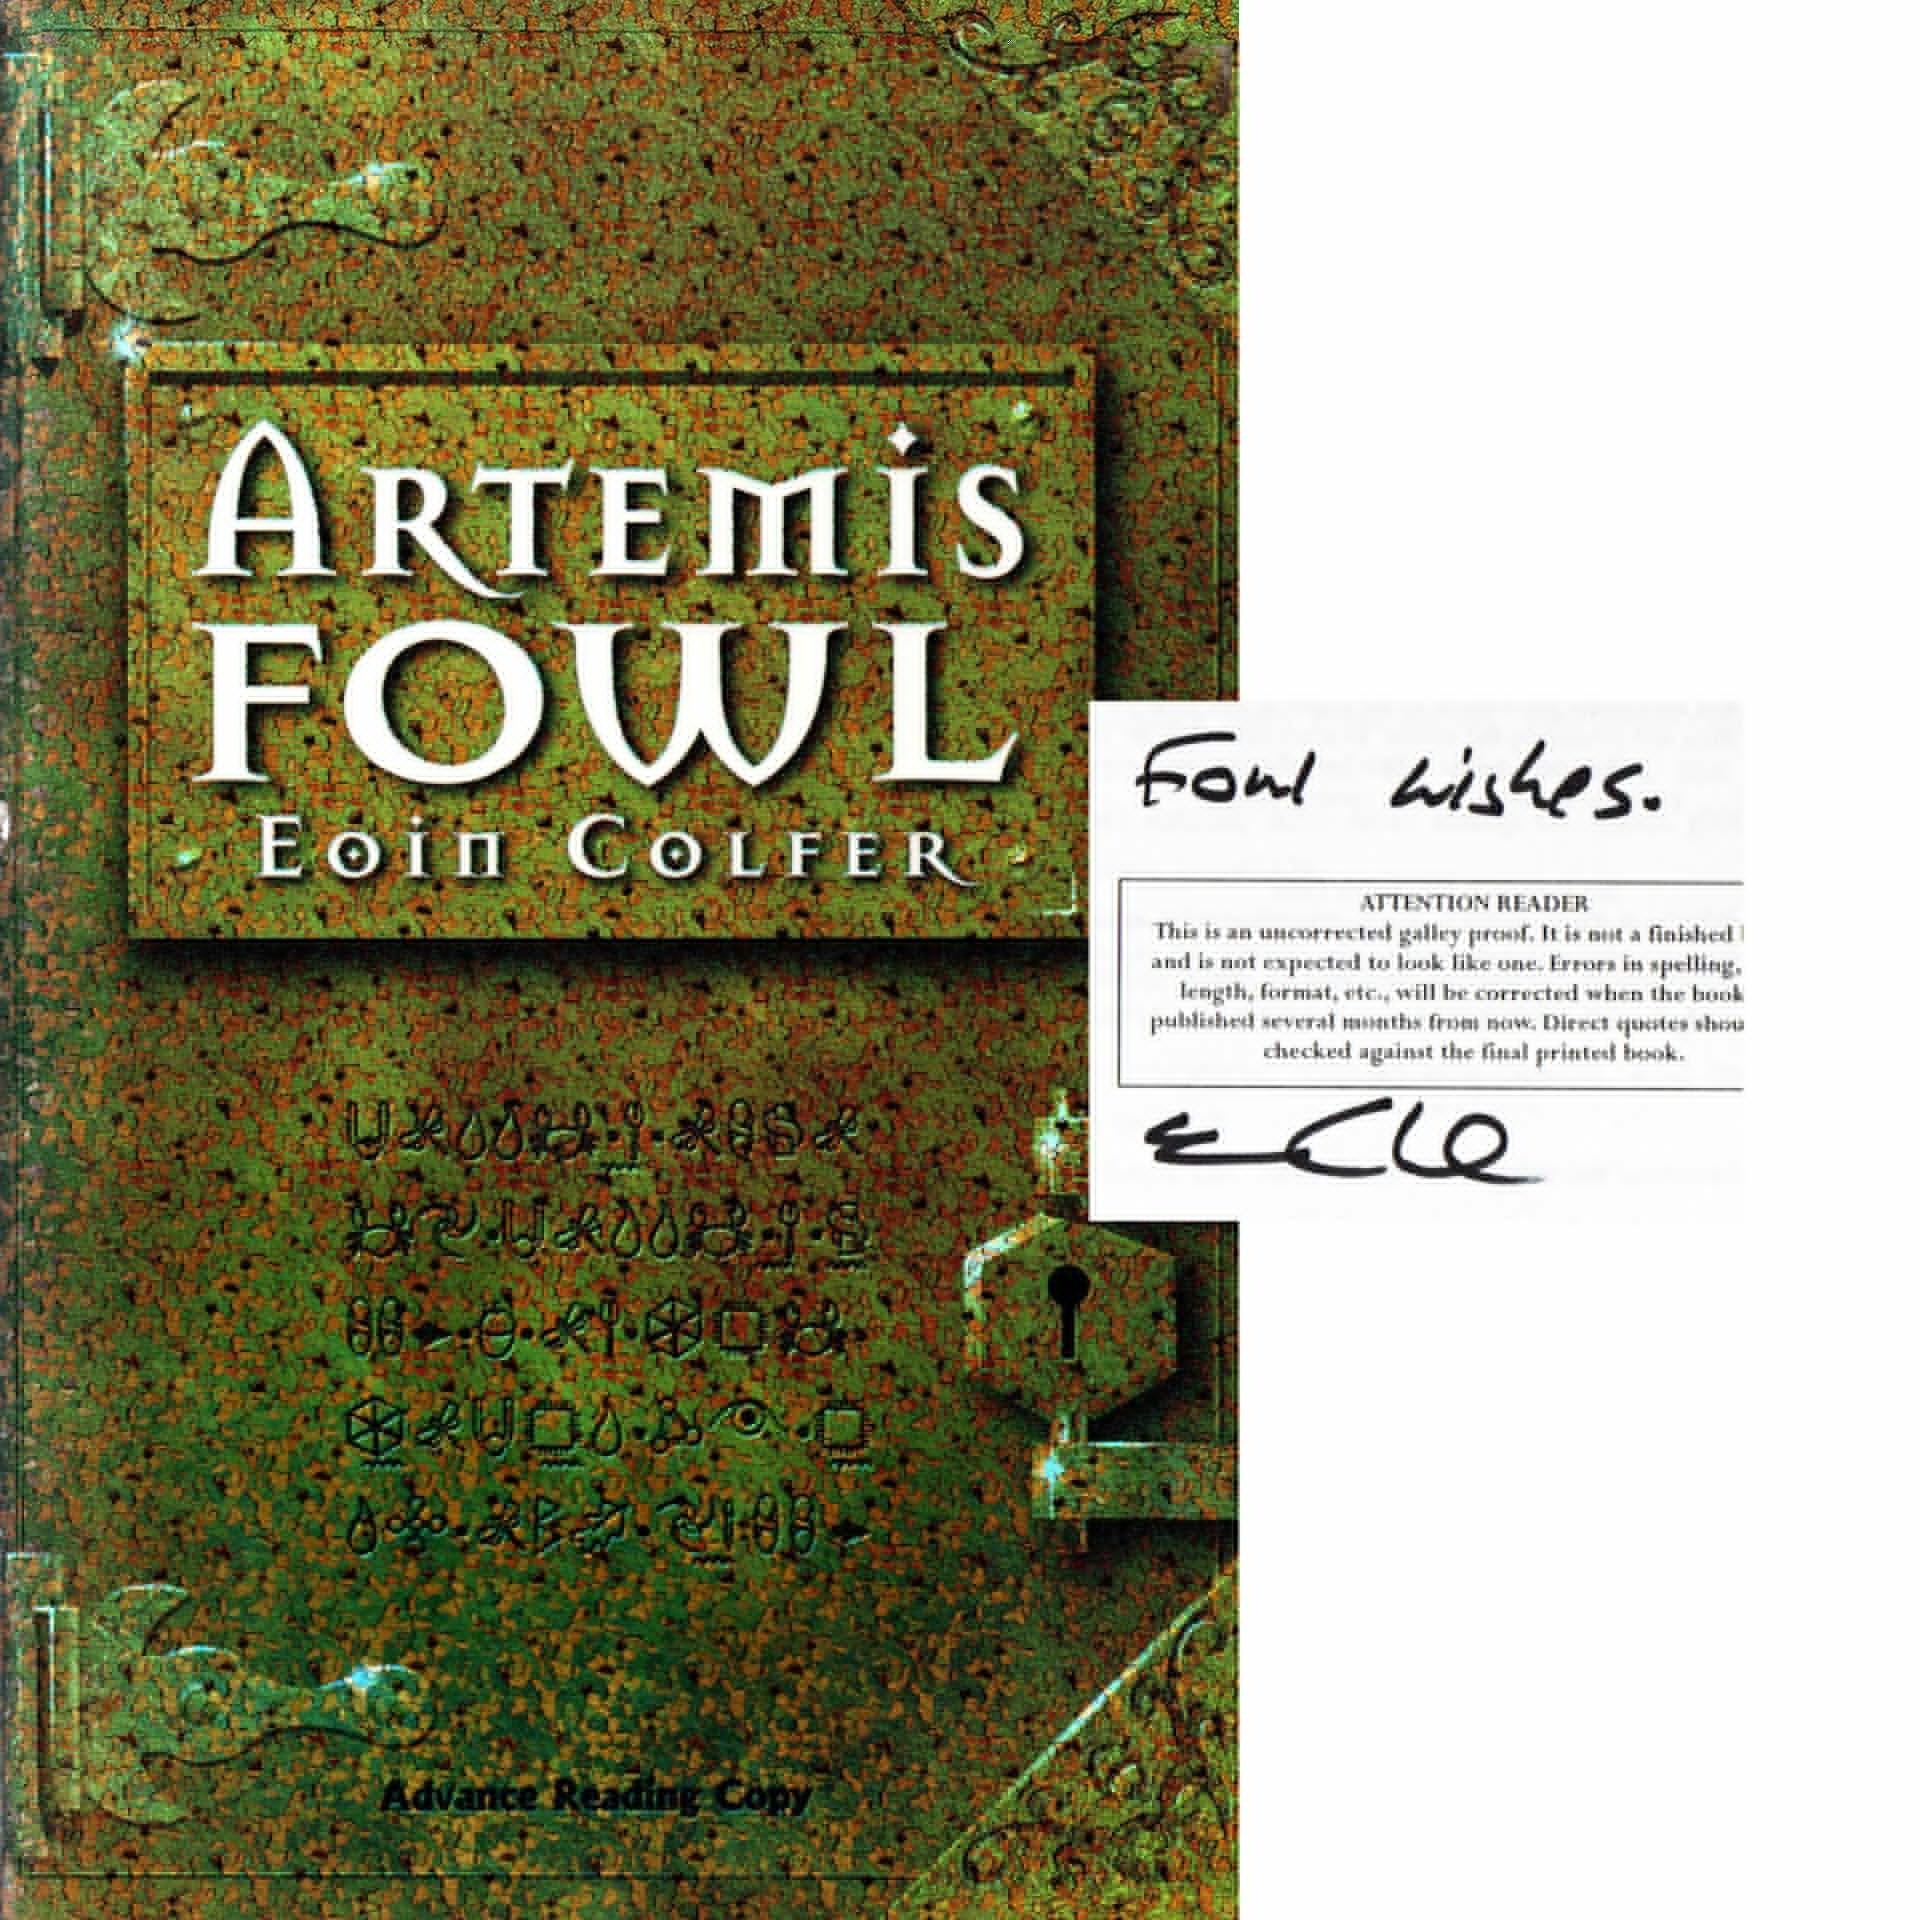 Artemis Fowl German: Artemis Fowl 2 - Die Verschworung (German Edition) -  Colfer, Eoin: 9783548603872 - AbeBooks